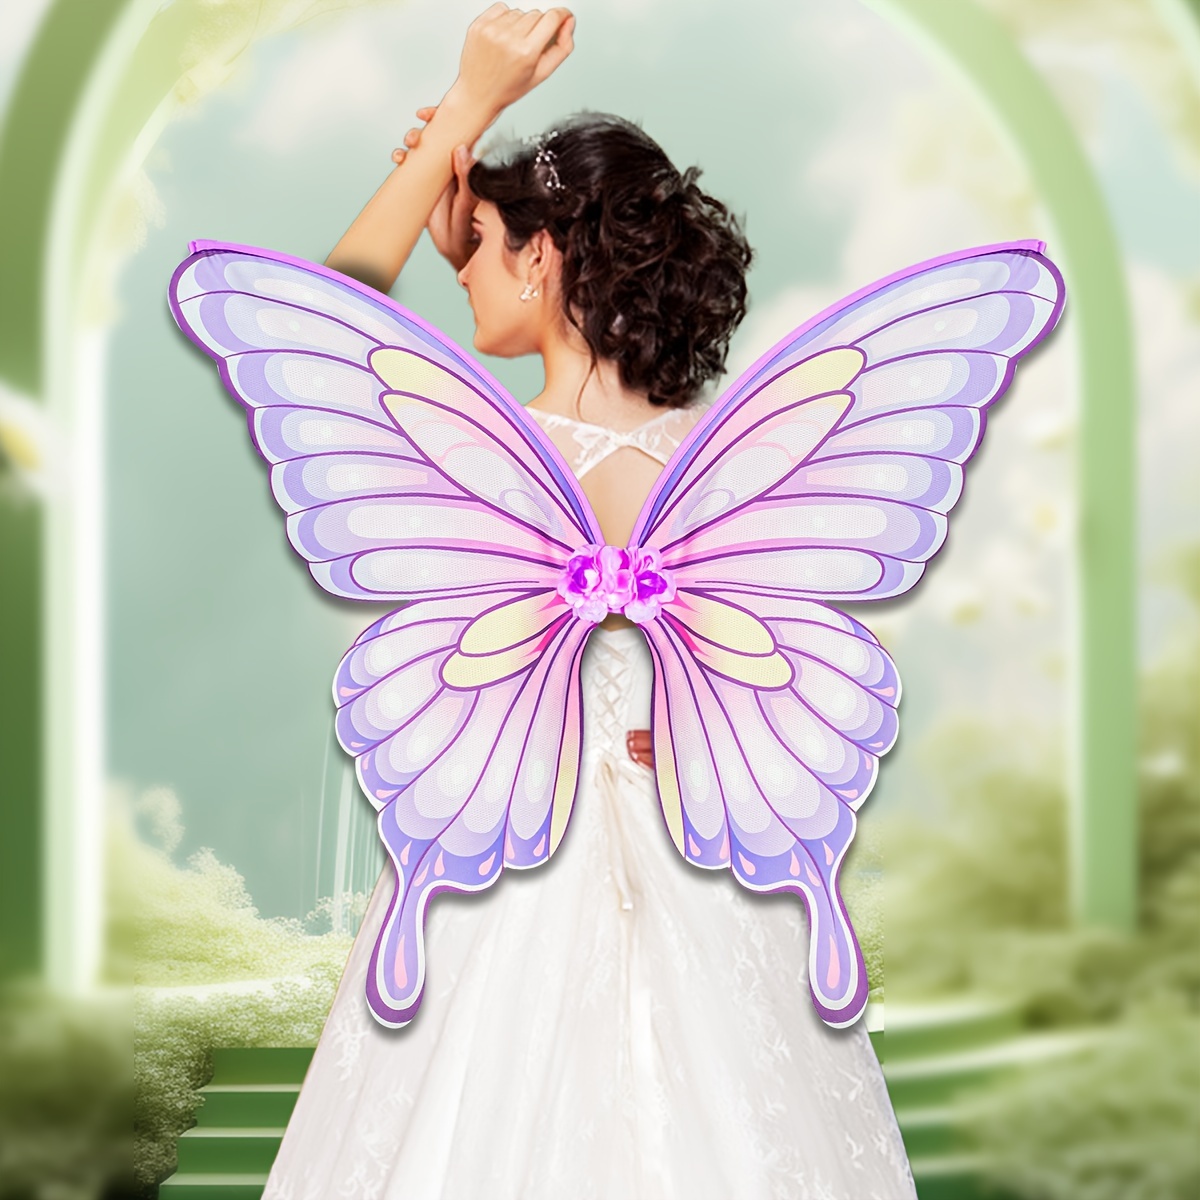 Kids Sparkling Butterfly Wing Asymmetrical Elf Fairy Wings w/Shoulder Straps